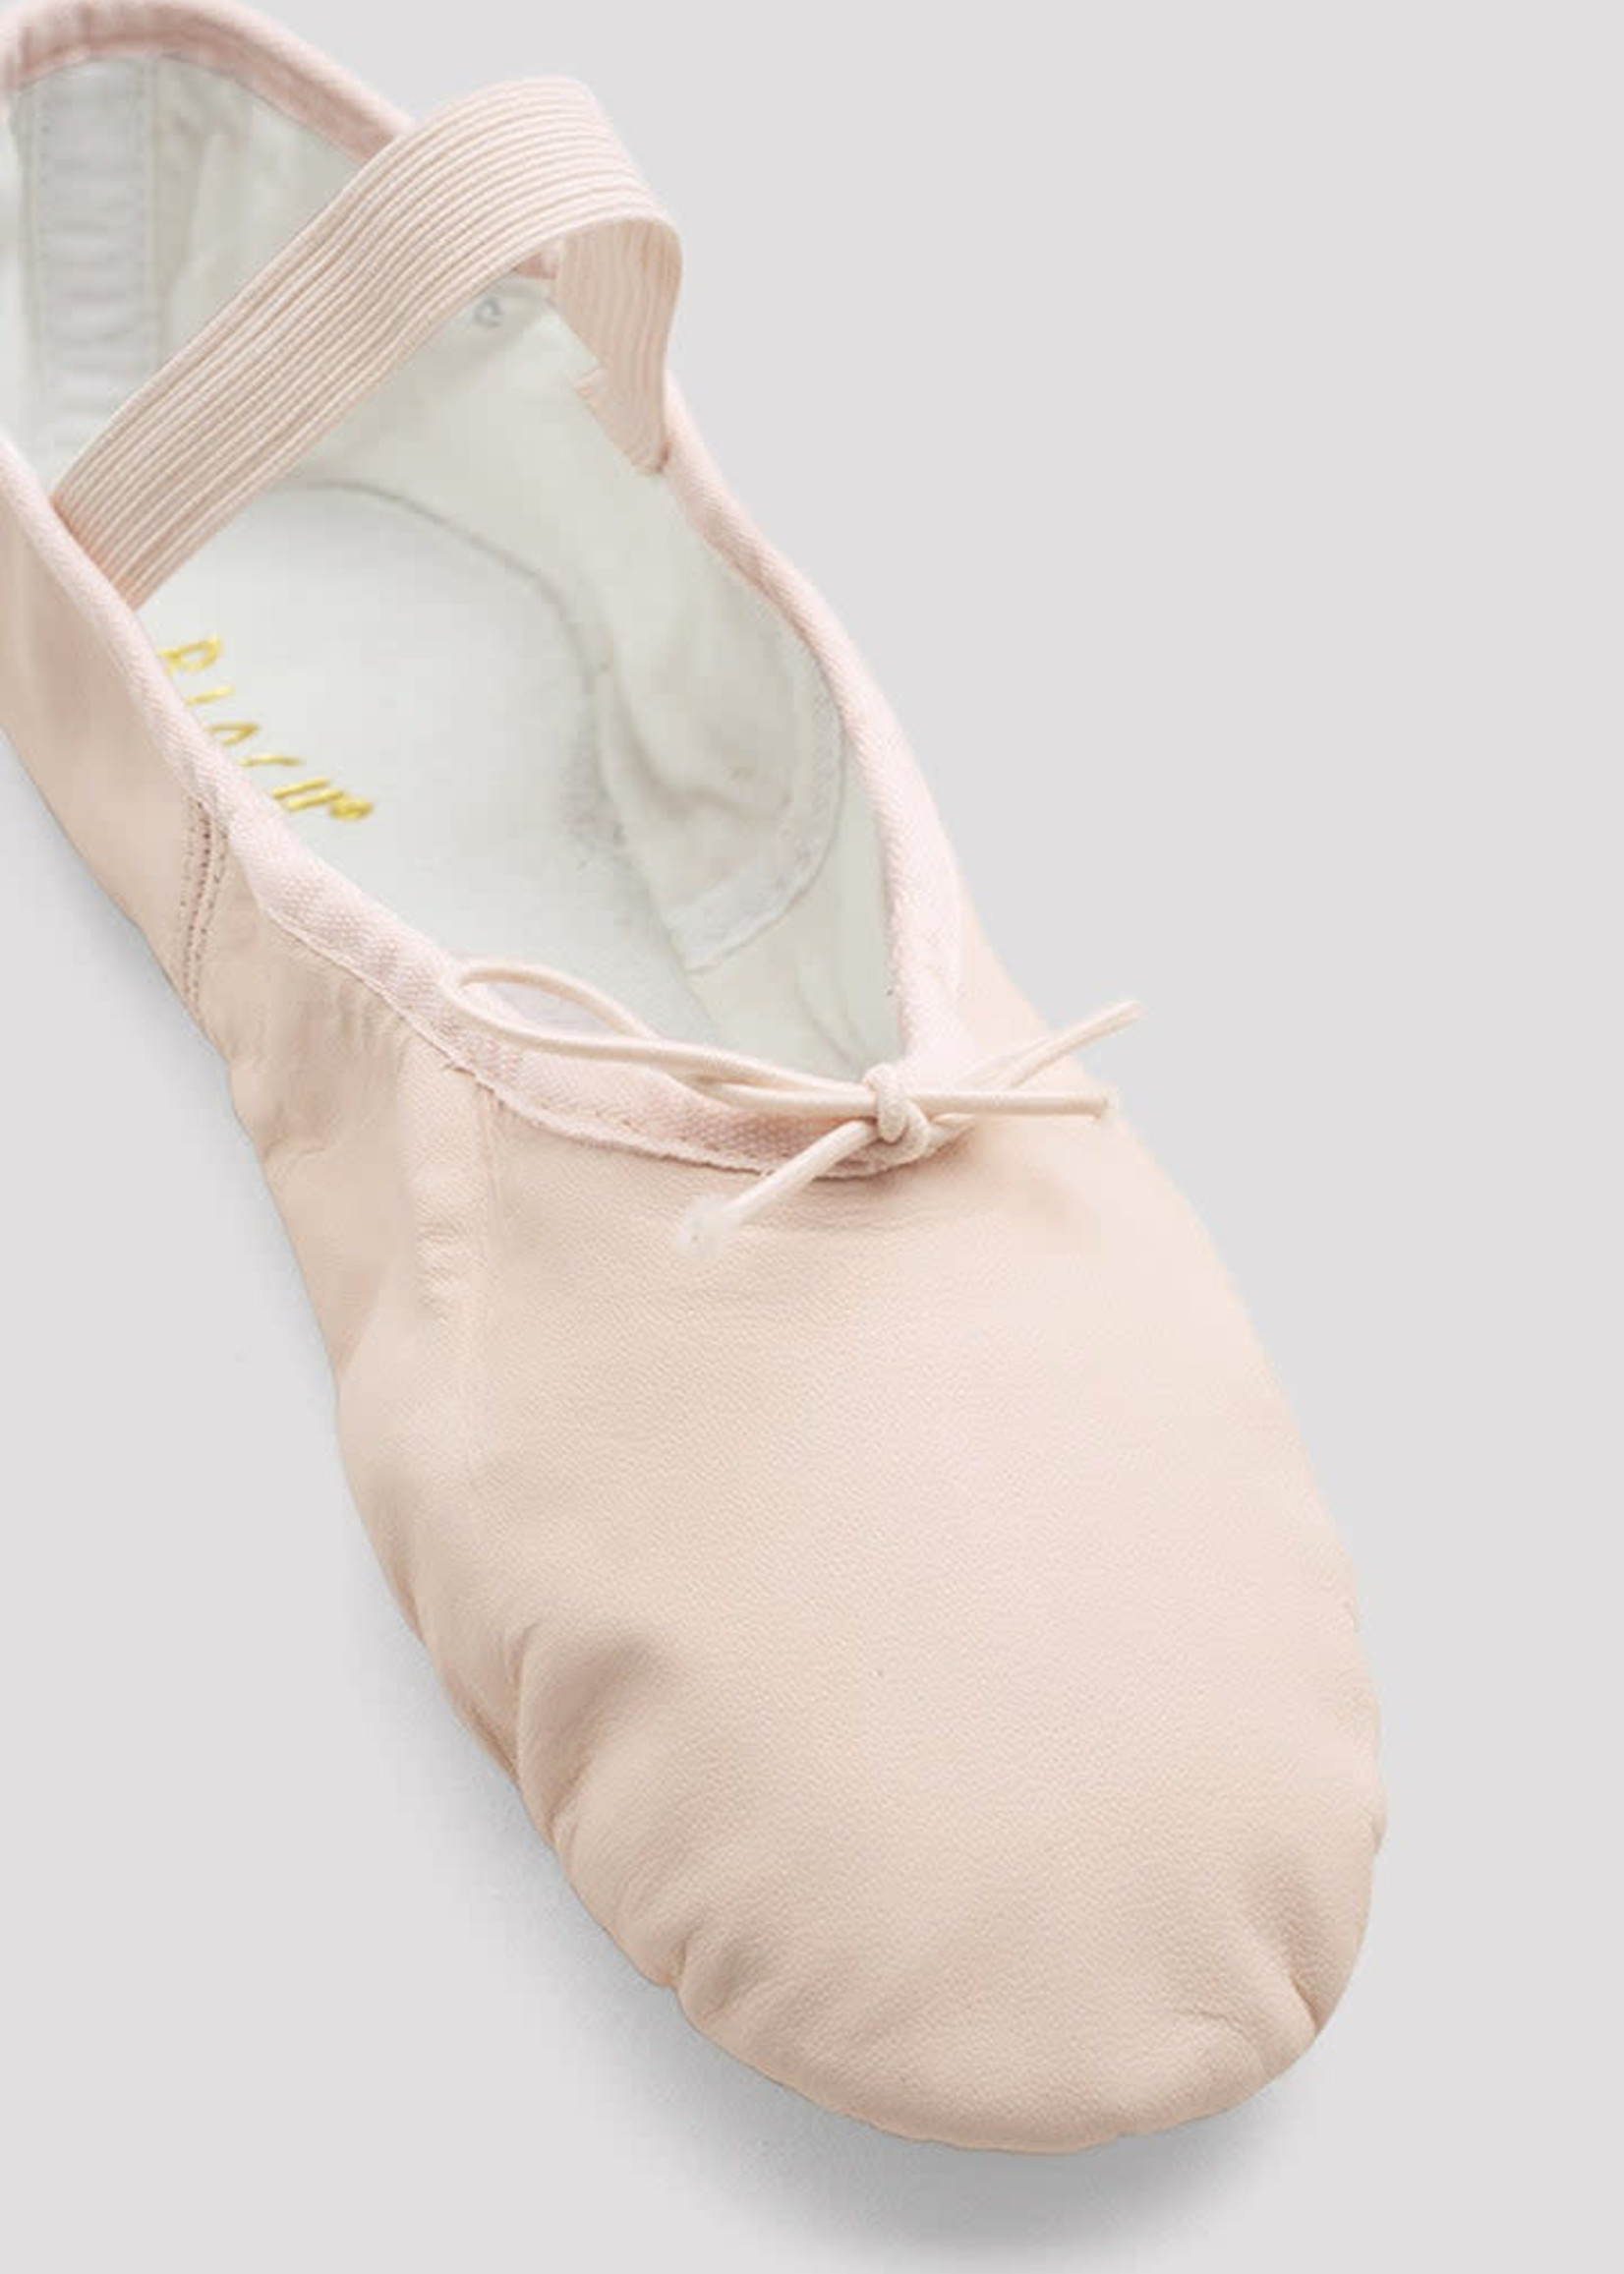 Bloch Dansoft Full Footed Adult Ballet Shoe